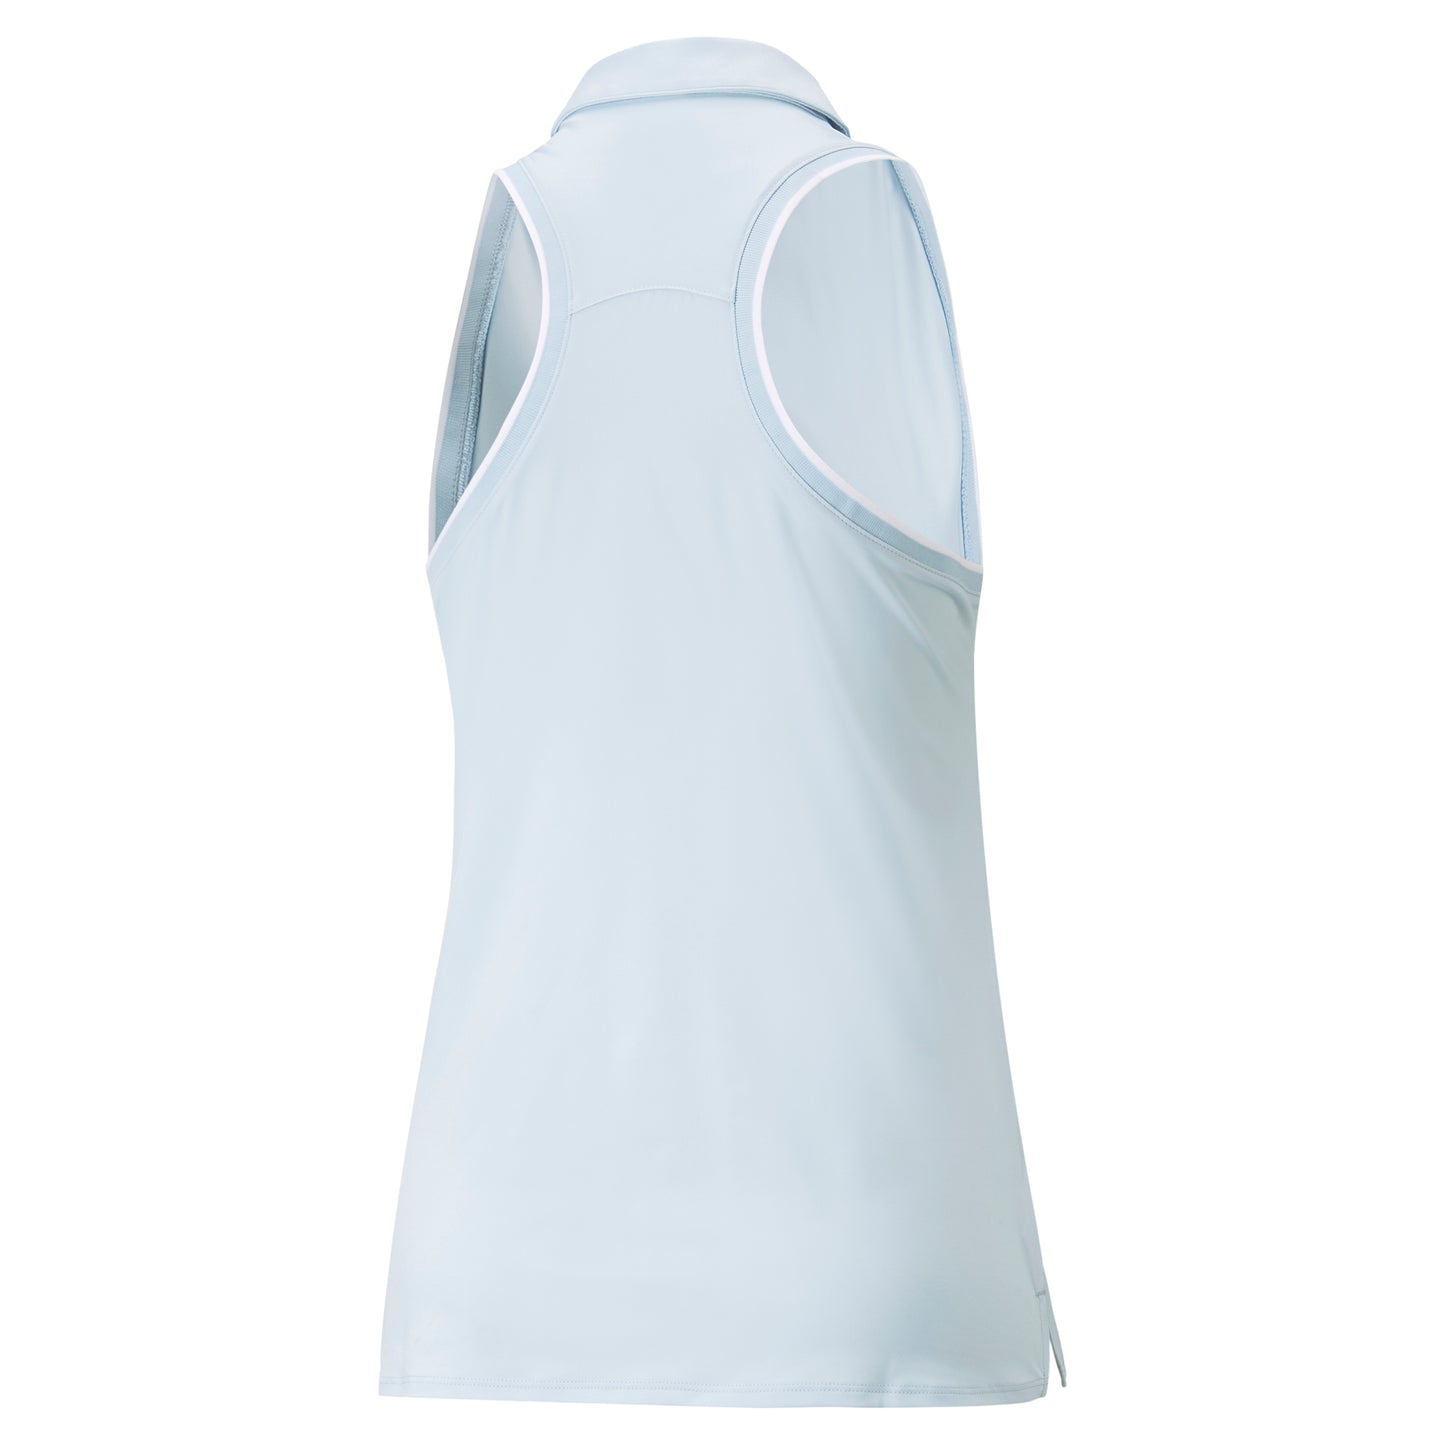 Lasfour Cool Golf Shirts For Women, Womens White Sleeveless Golf